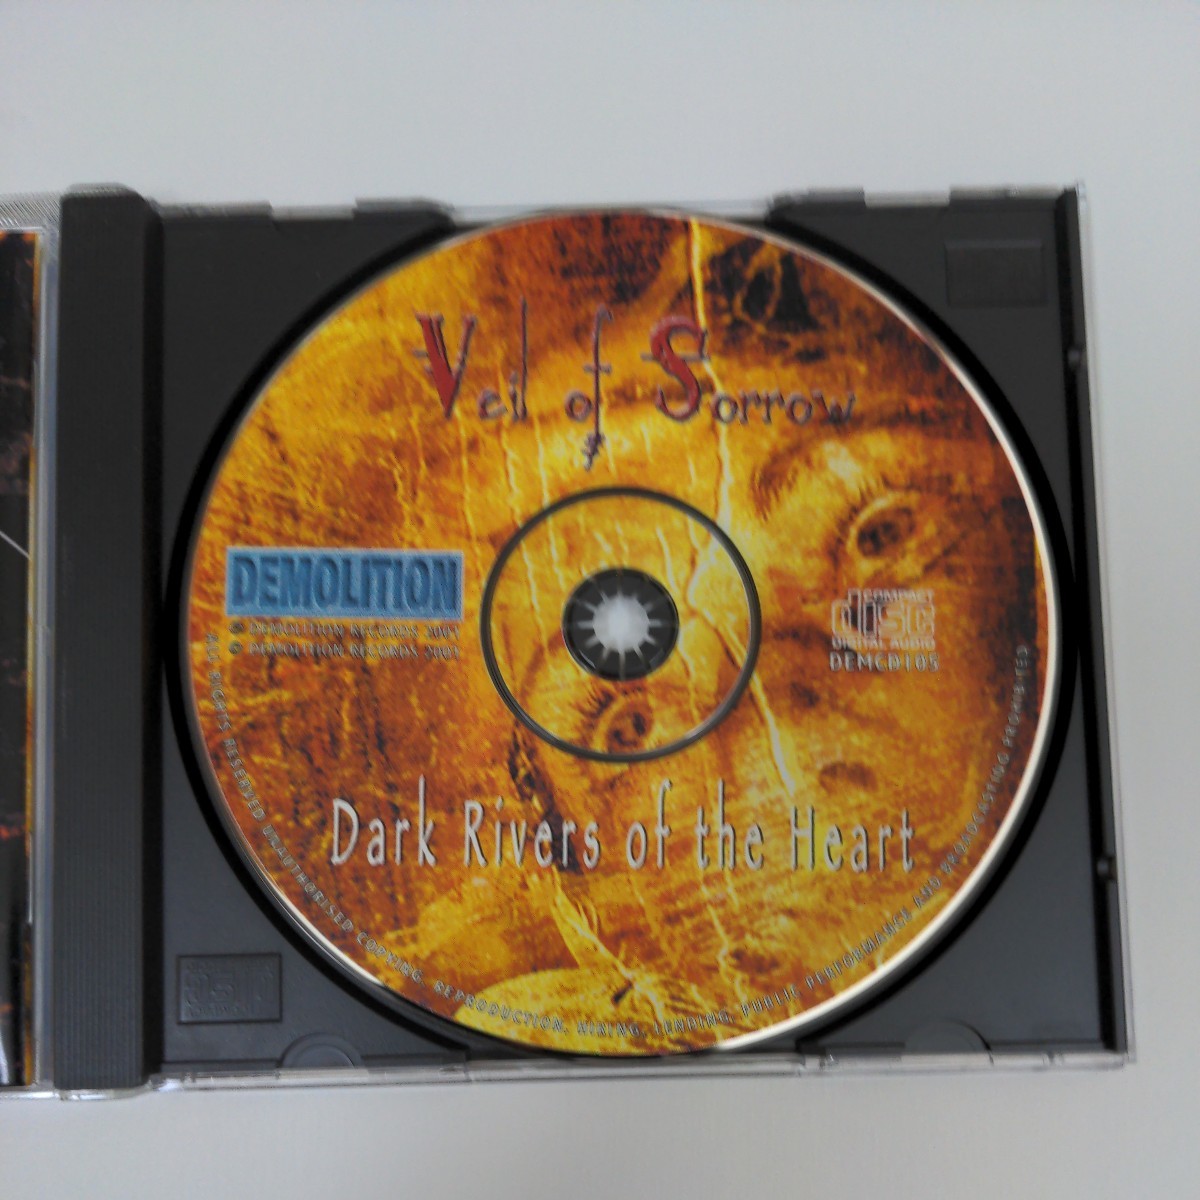 VEIL OF SORROW　Sweden　Melodic Gothic Heavy Metal　メロディック・ゴシック・ヘヴィメタル　輸入盤CD　唯一作_画像5